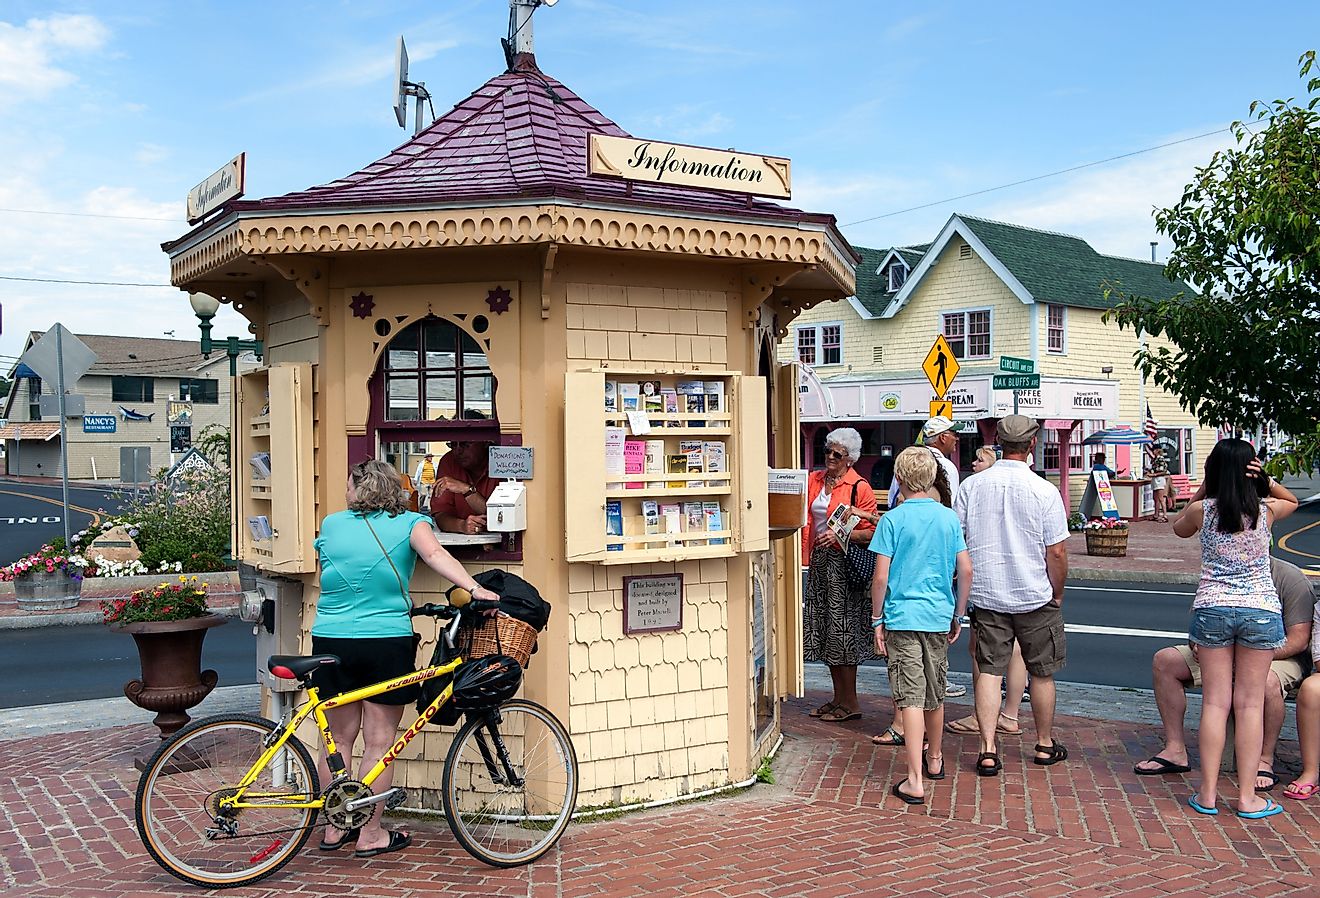 Biker consults the tourist information in Oak Bluffs, Martha's Vineyard, Massachusetts. Image credit Rolf_52 via Shutterstock